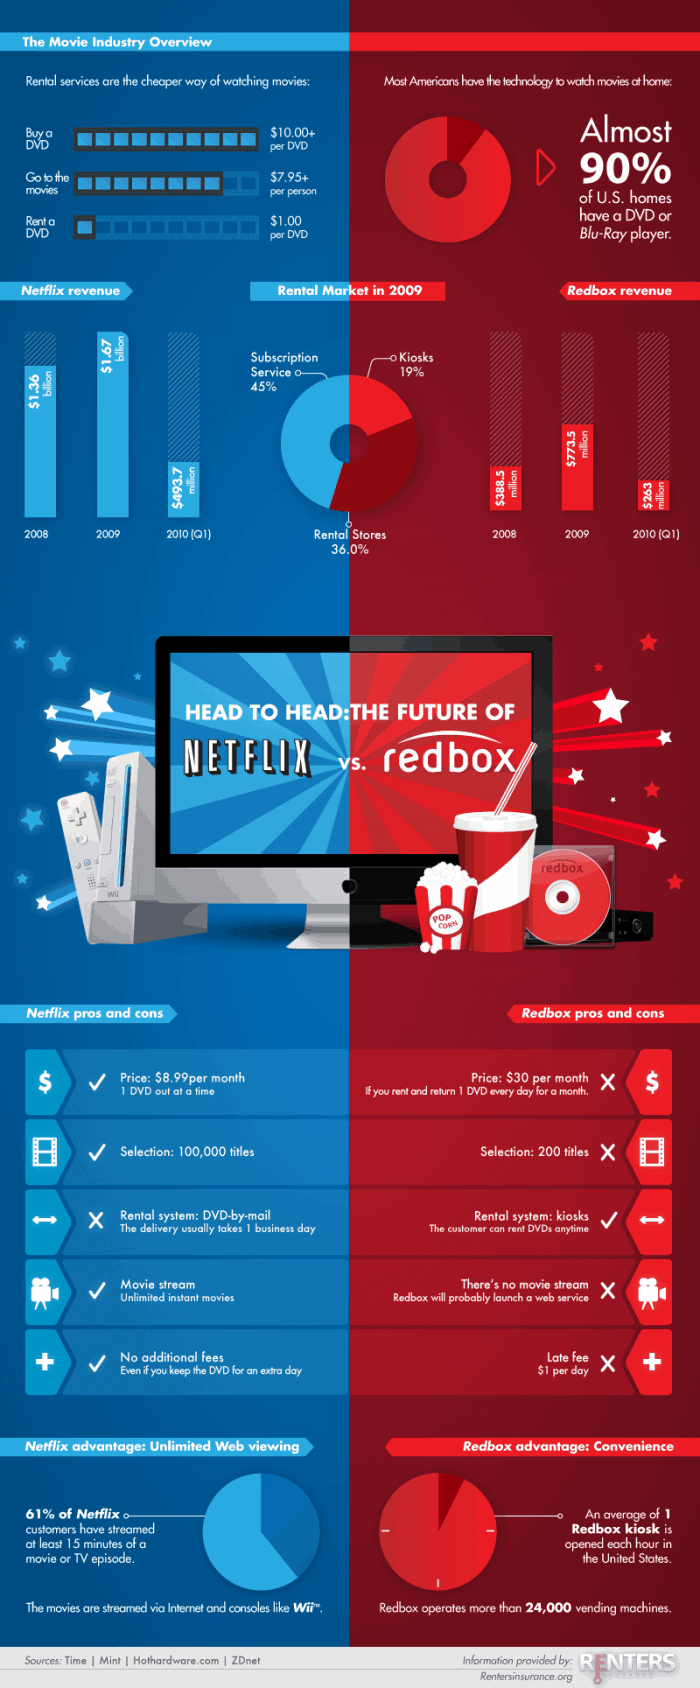 Netflix vs Redbox